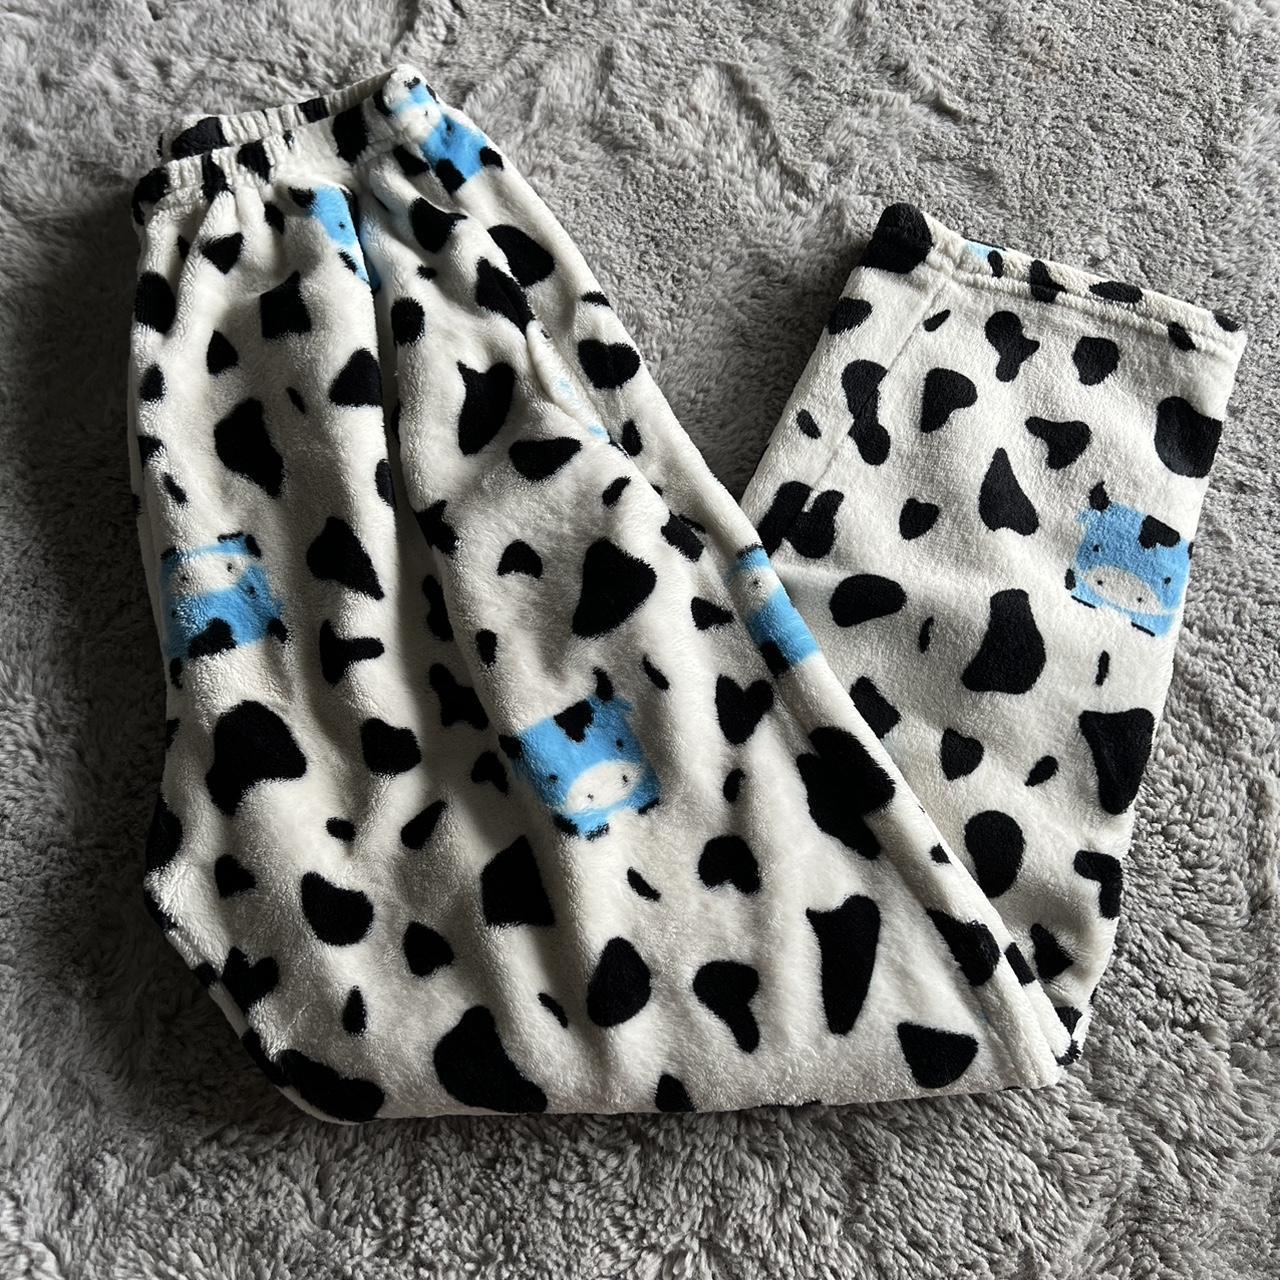 Kidcore pastel star charm pant chain ✨ Handmade pant - Depop